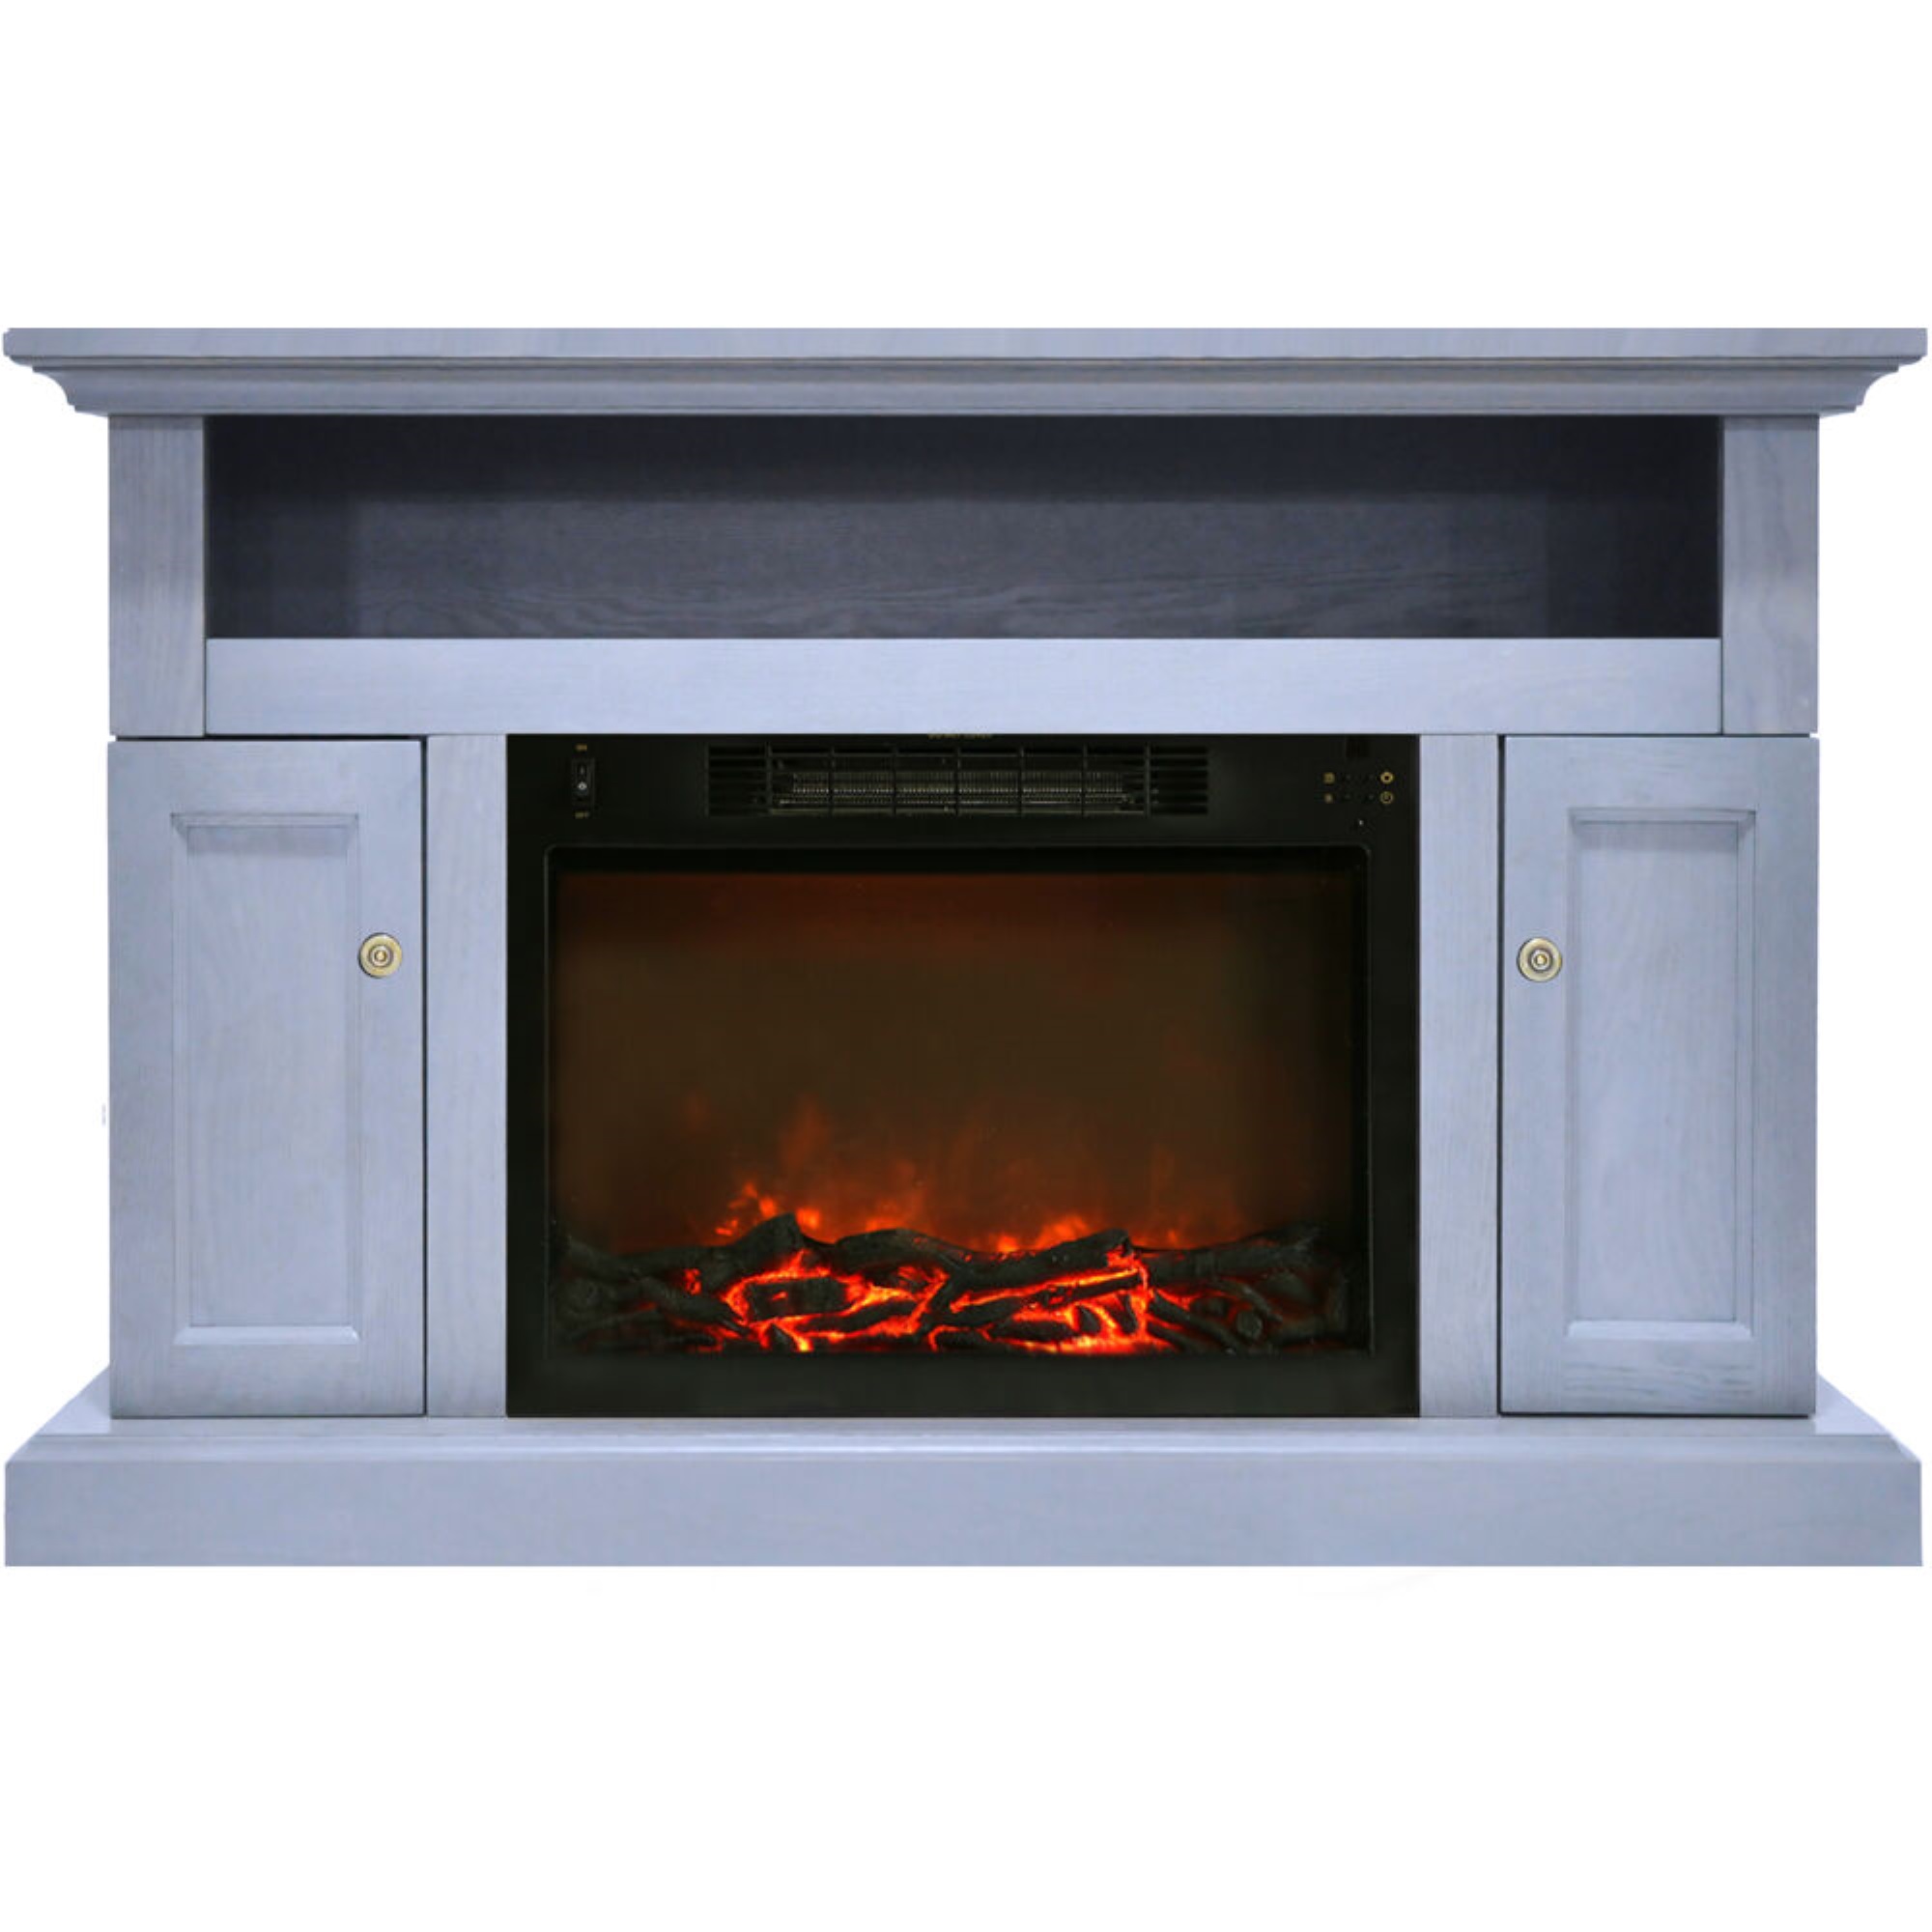 CAMFPM 47.2"x15.7"x30.7" Sorrento Fireplace Mantel with Log Insert - Slate Blue